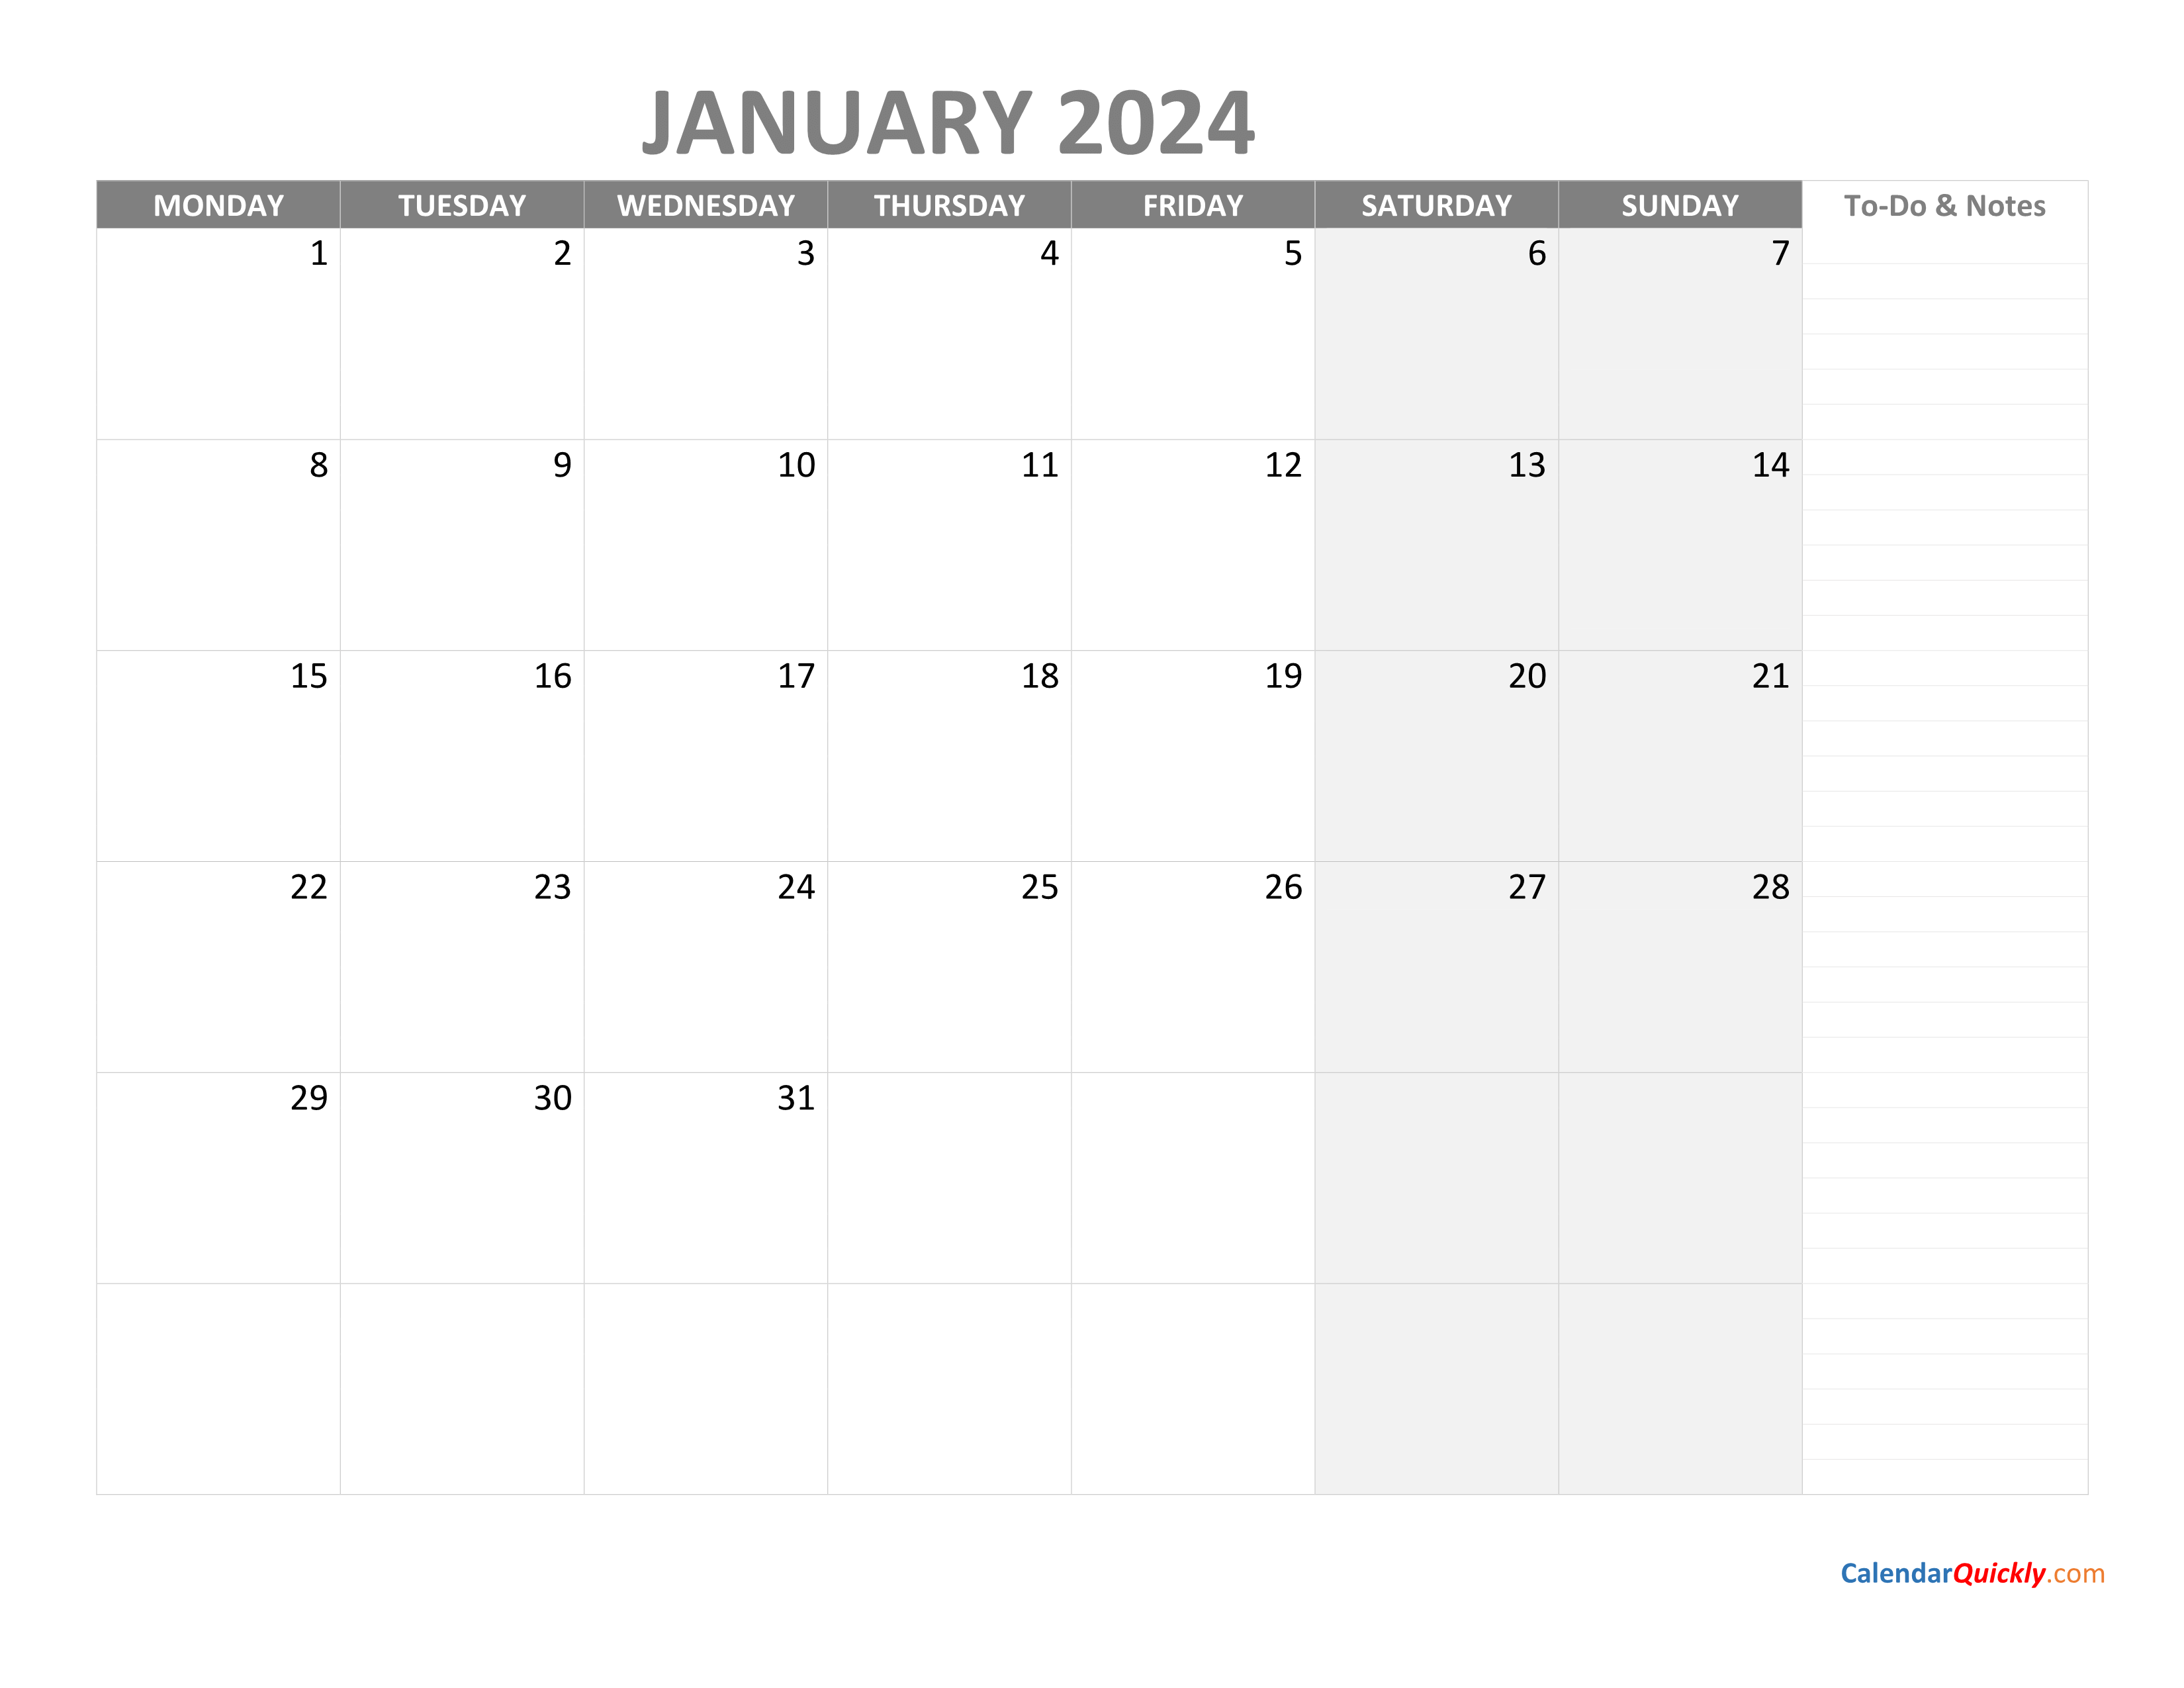 January Monday Calendar 2024 with Notes Calendar Quickly